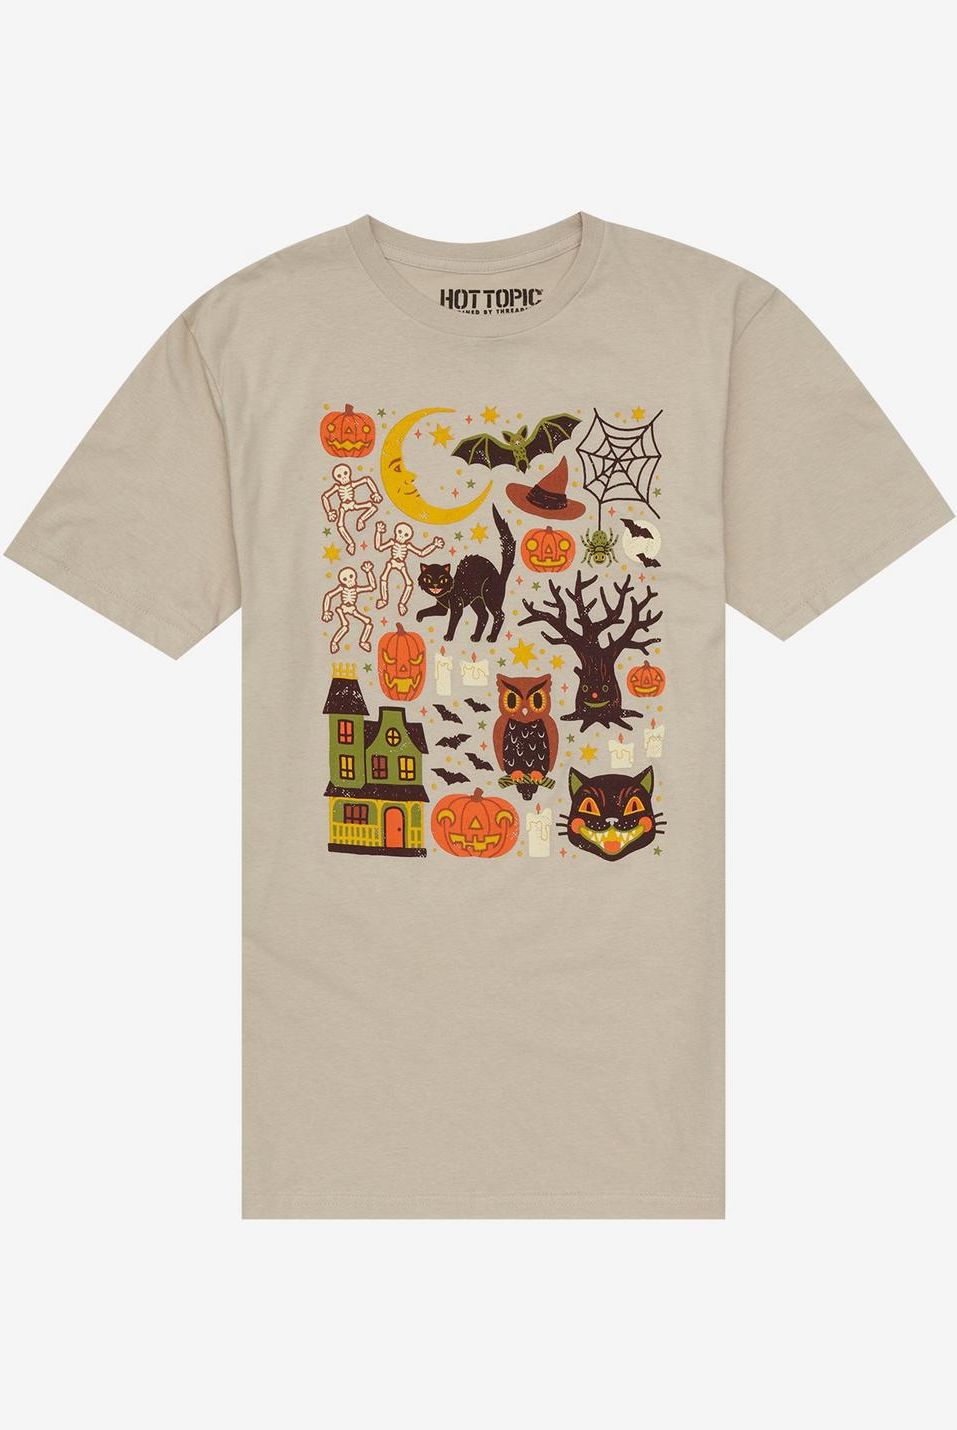 The Best Cute Halloween Shirts Graphic by Fairymahi66 · Creative